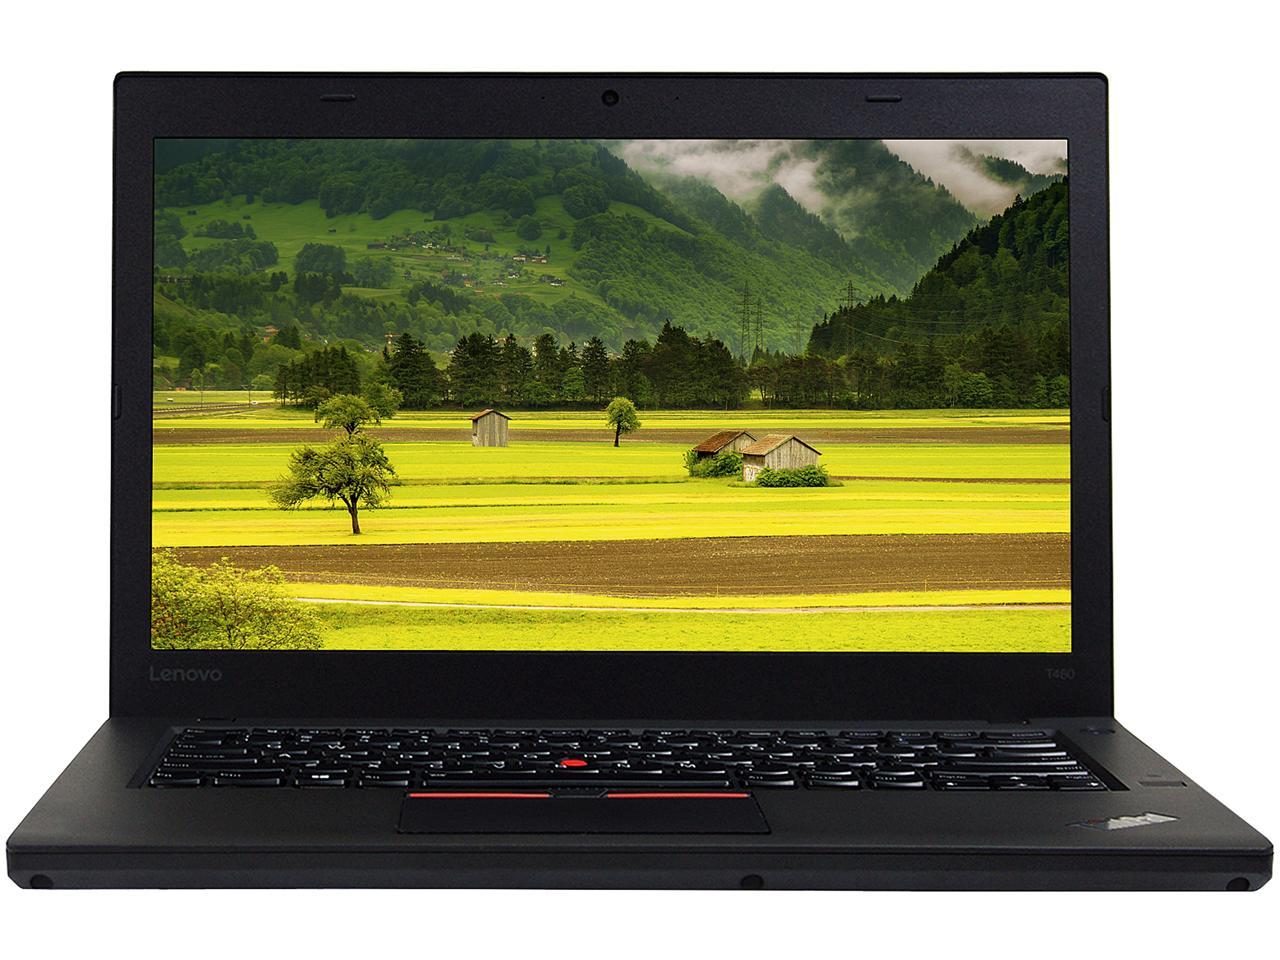 Lenovo Grade A Laptop T460 Intel Core i5 6th Gen 6300U (2.40 GHz) 8 GB Memory 250 GB SSD Intel HD Graphics 520 14.0" Windows 10 Pro 64-bit